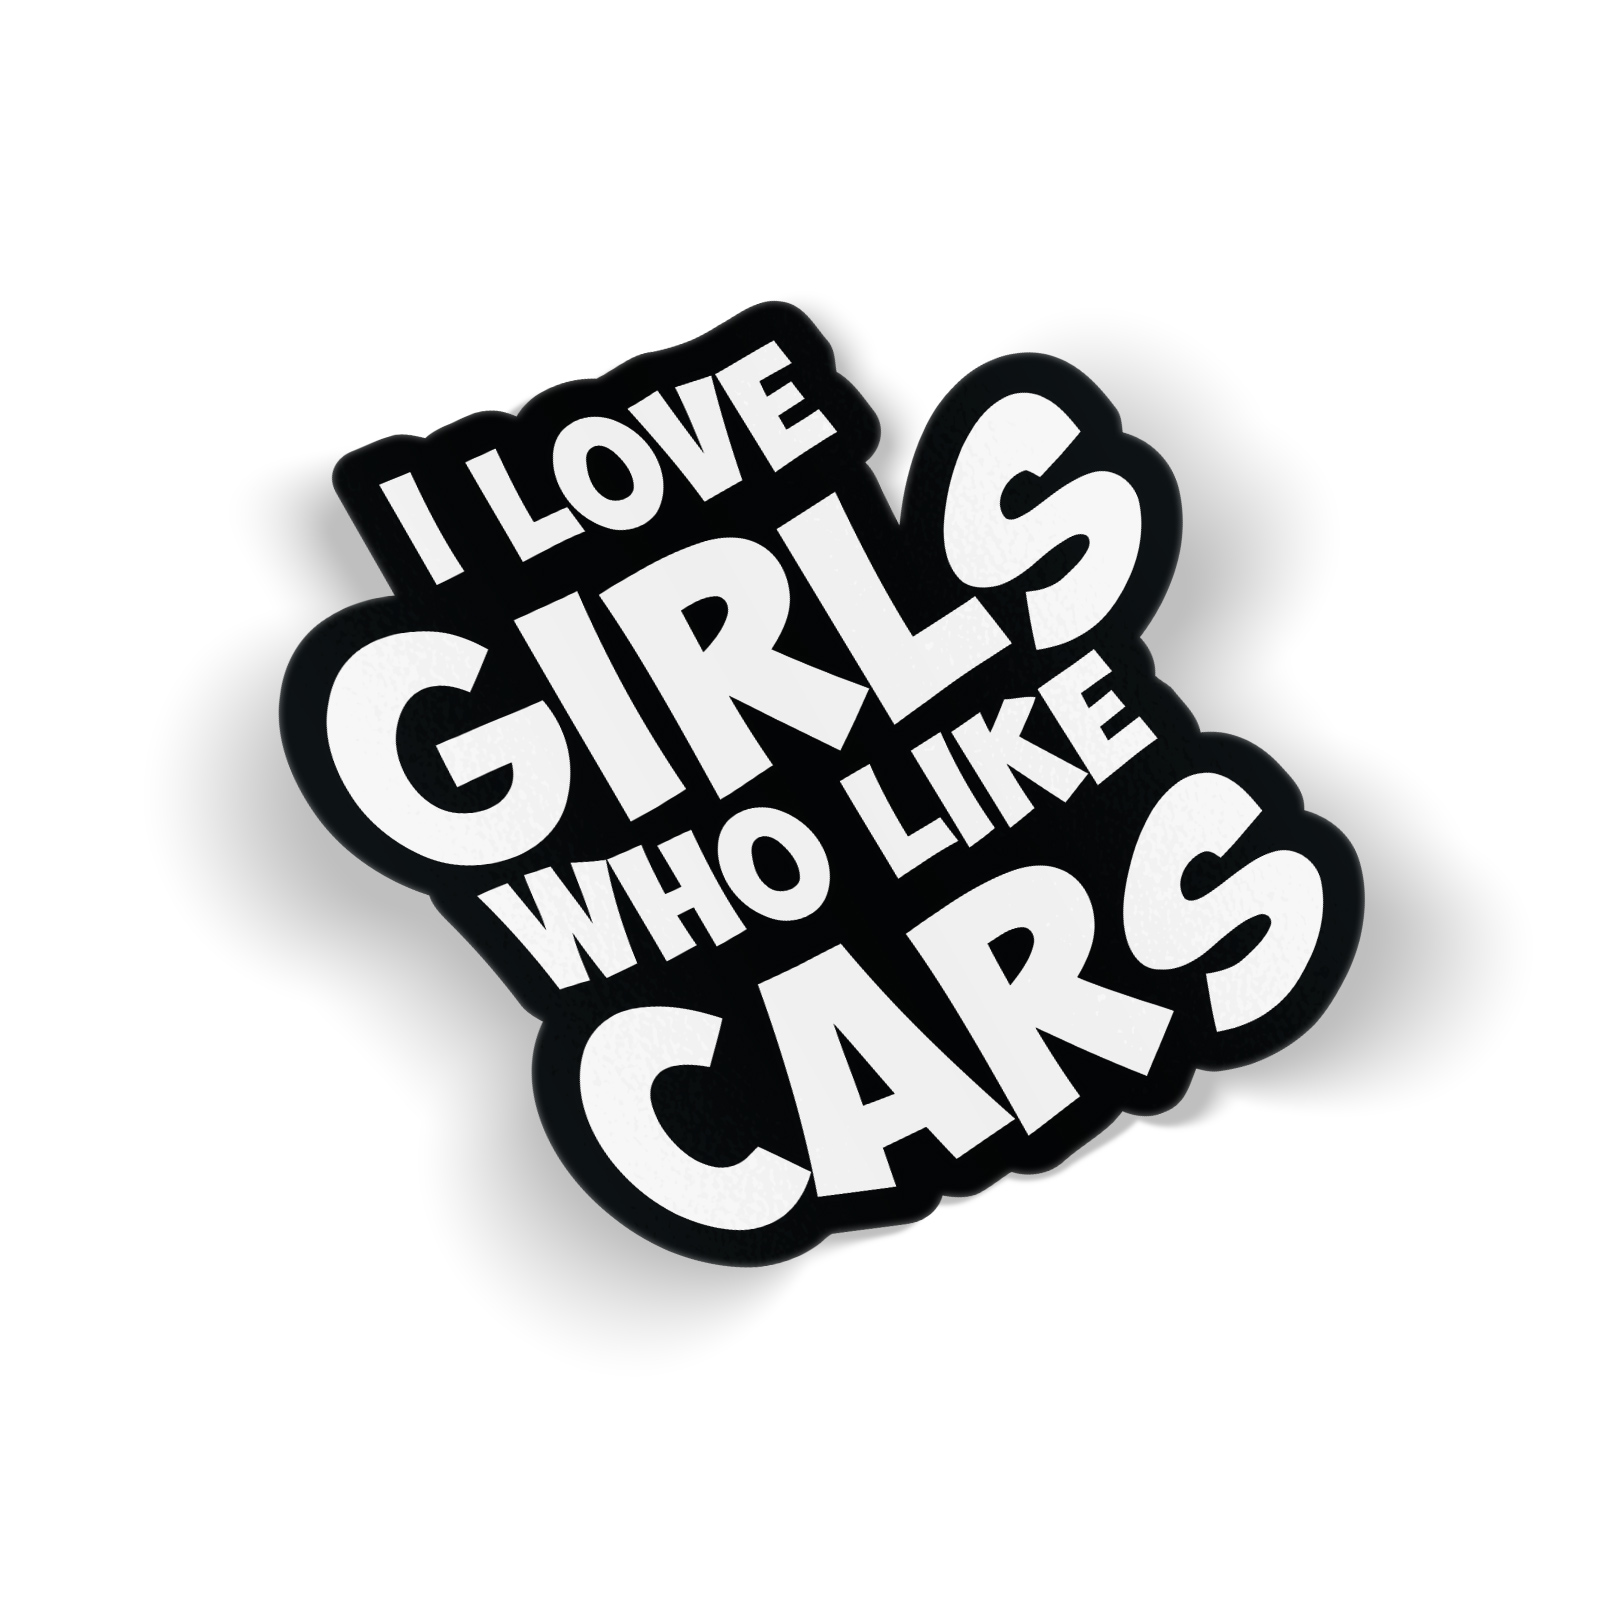 Girls Who Love Girls 1